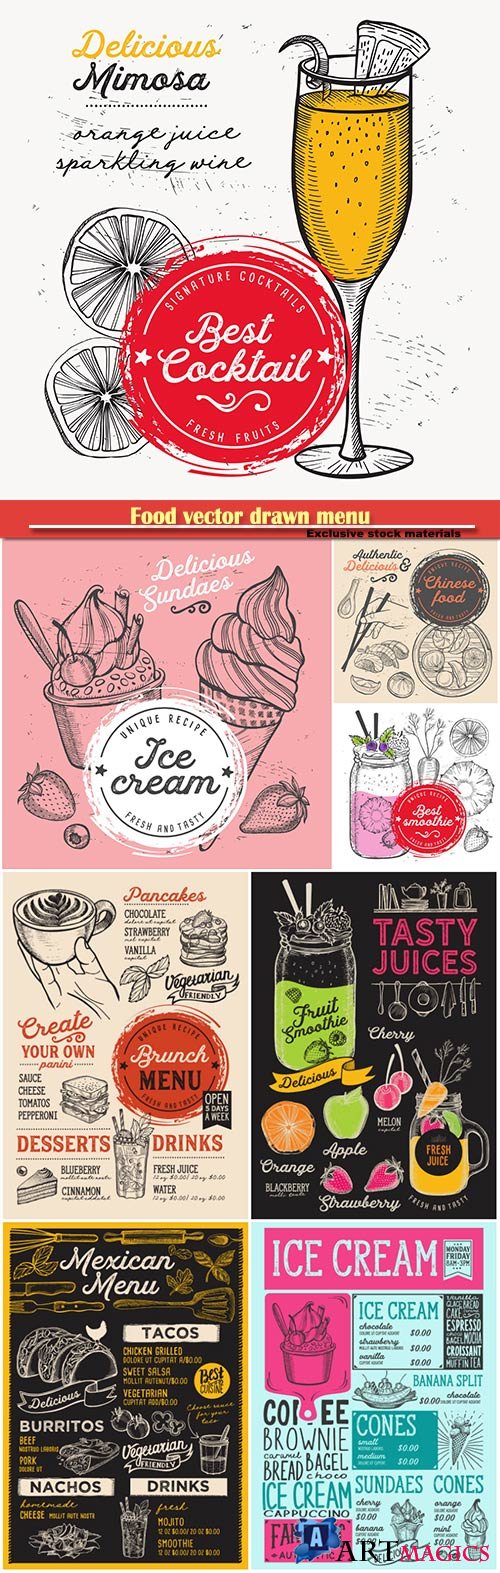 Food vector drawn menu, fast food, ice cream, desserts, mexican food